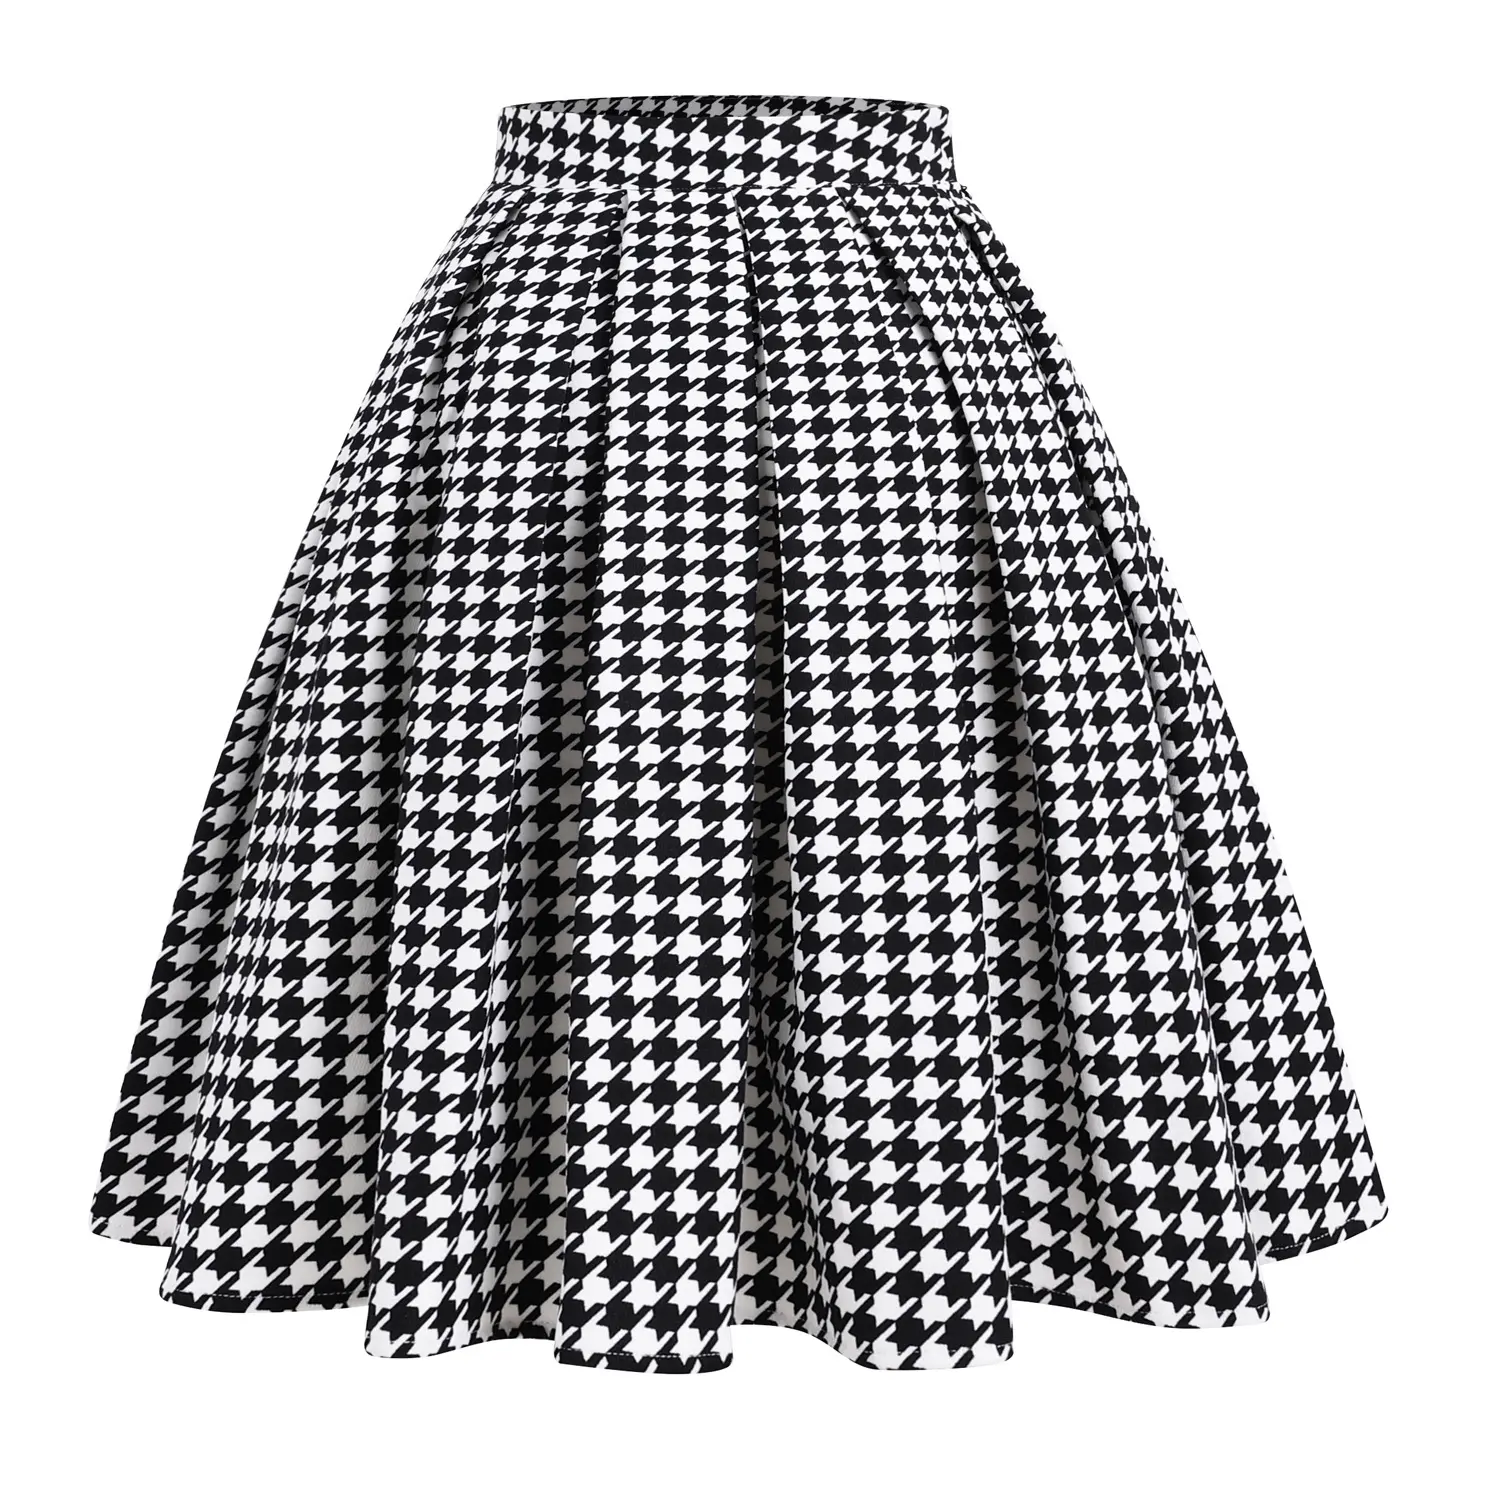 Classic stylish women seductive mini skirt sexy plaid polka dot houndstooth Versatile JK skirt with zipper